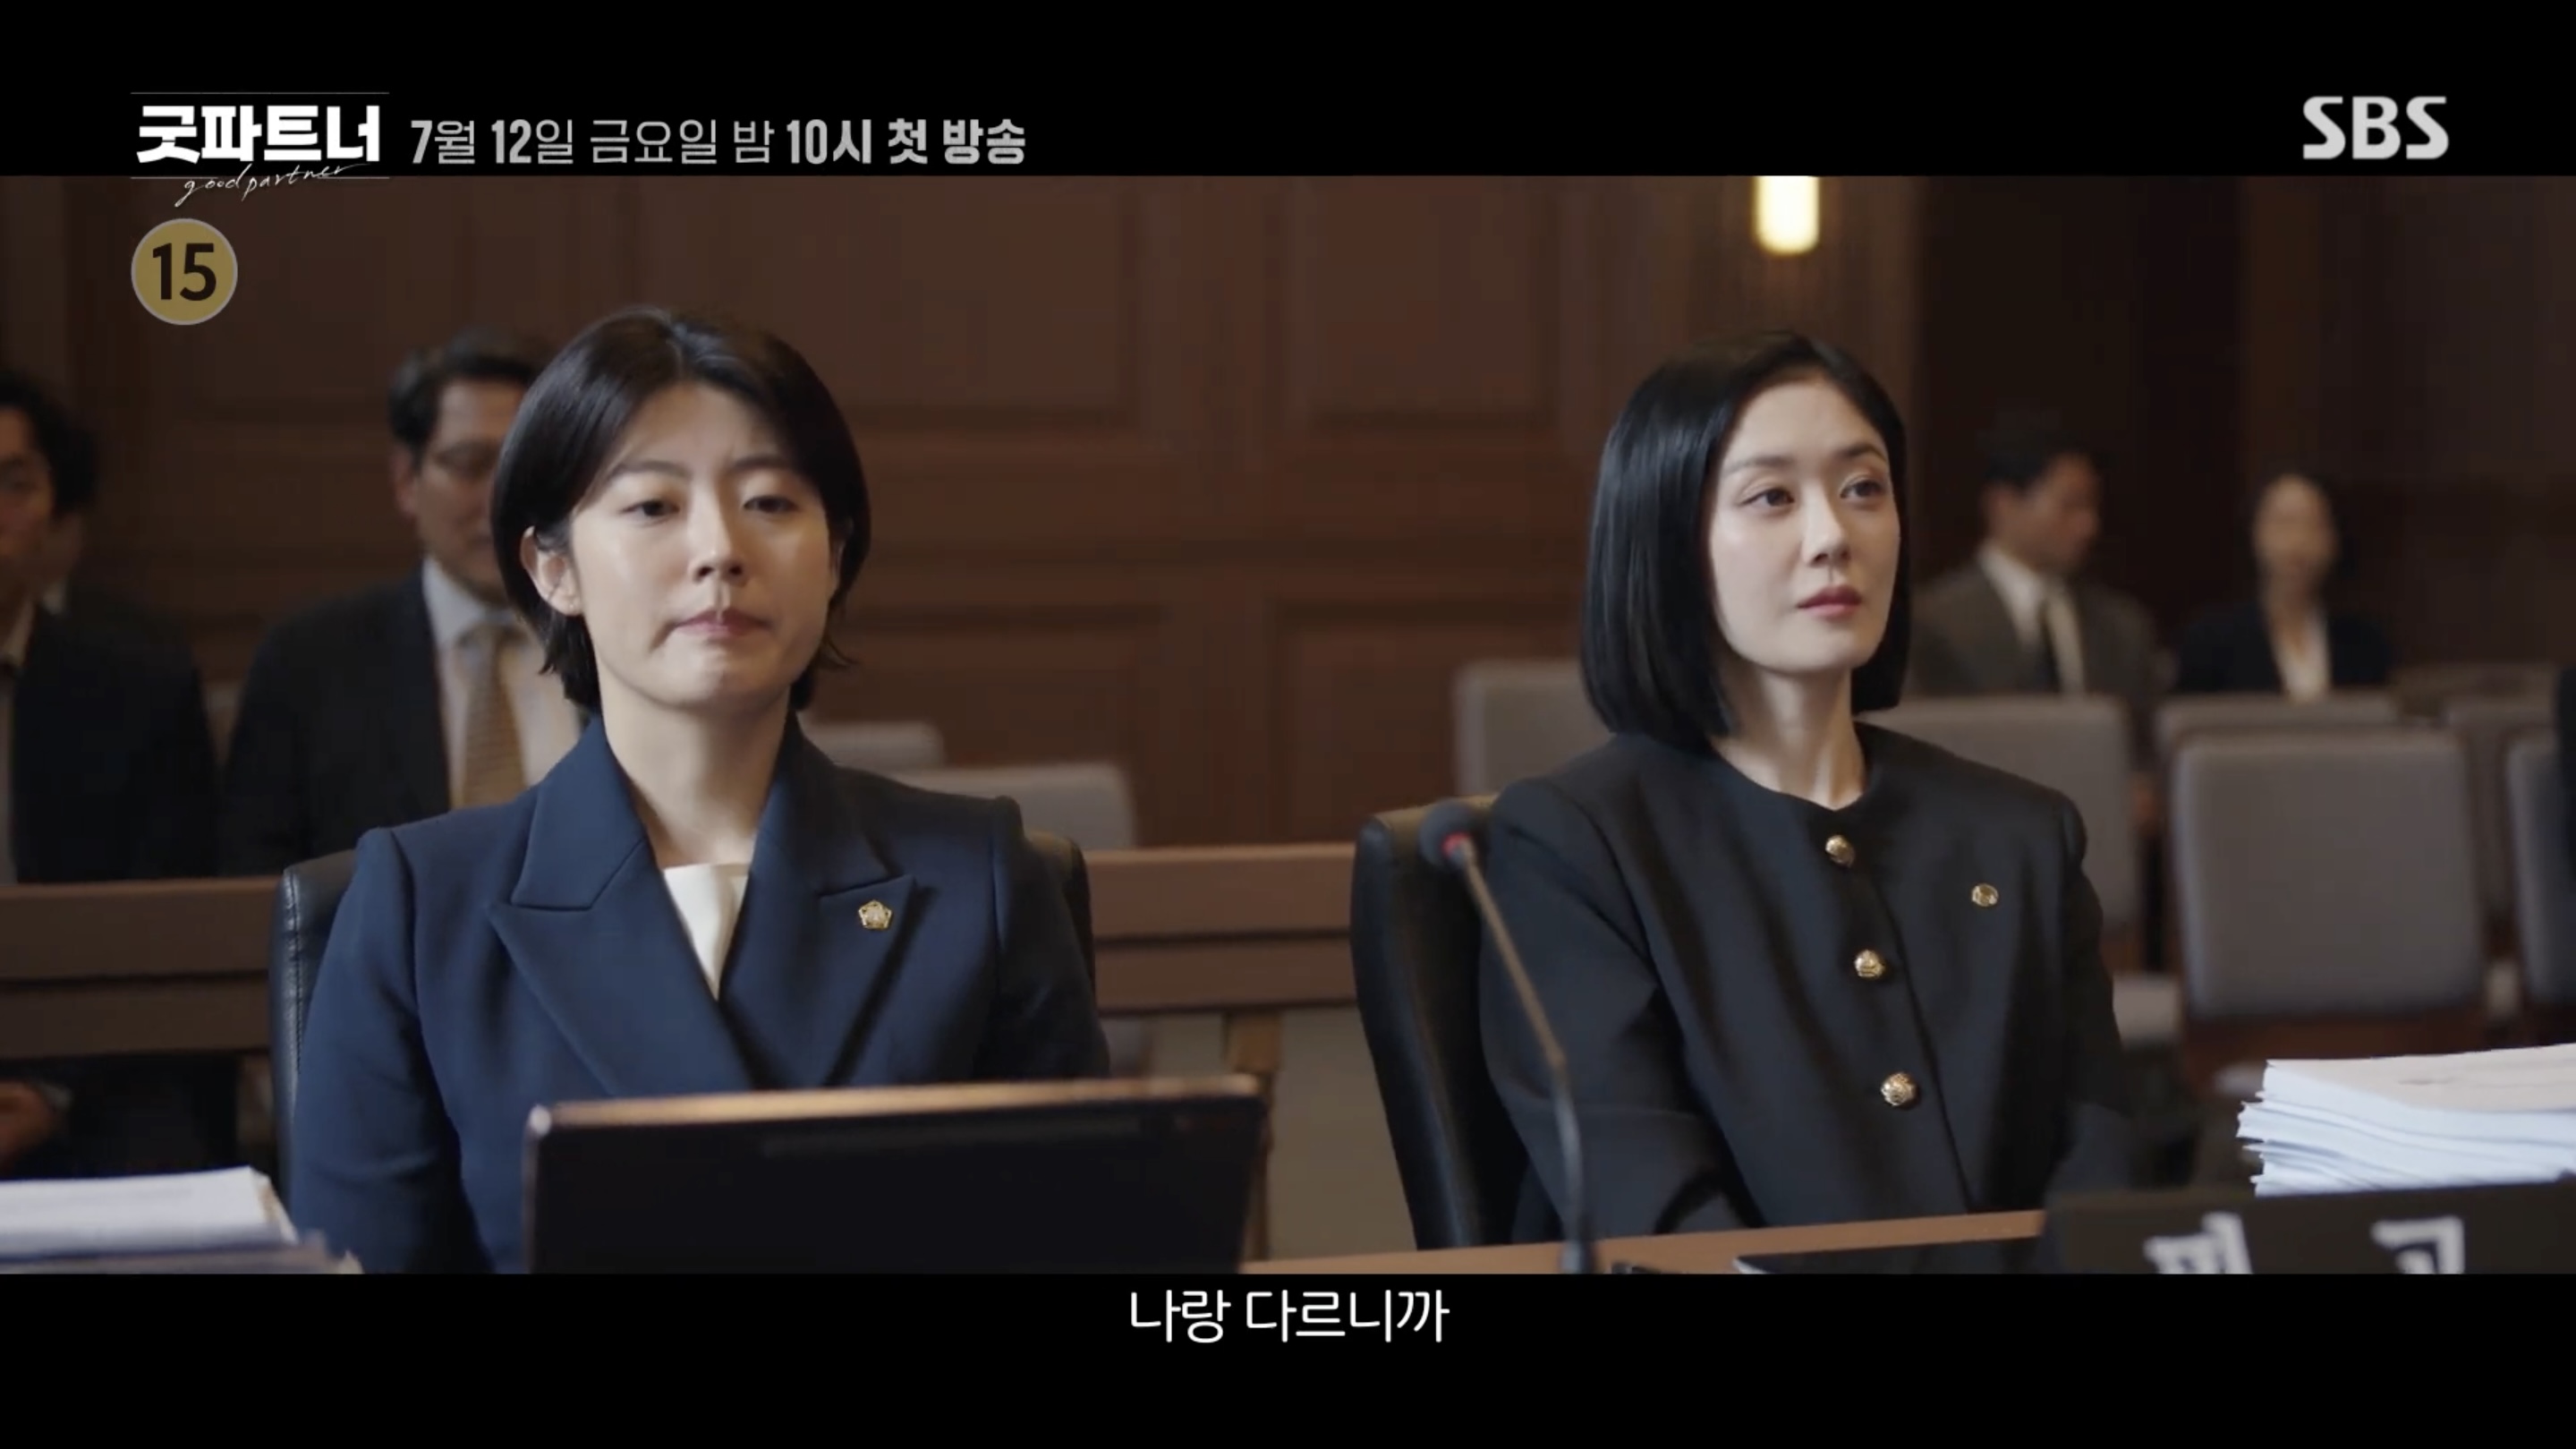 Jang Nara chooses Nam Ji-hyun as her Good Partner